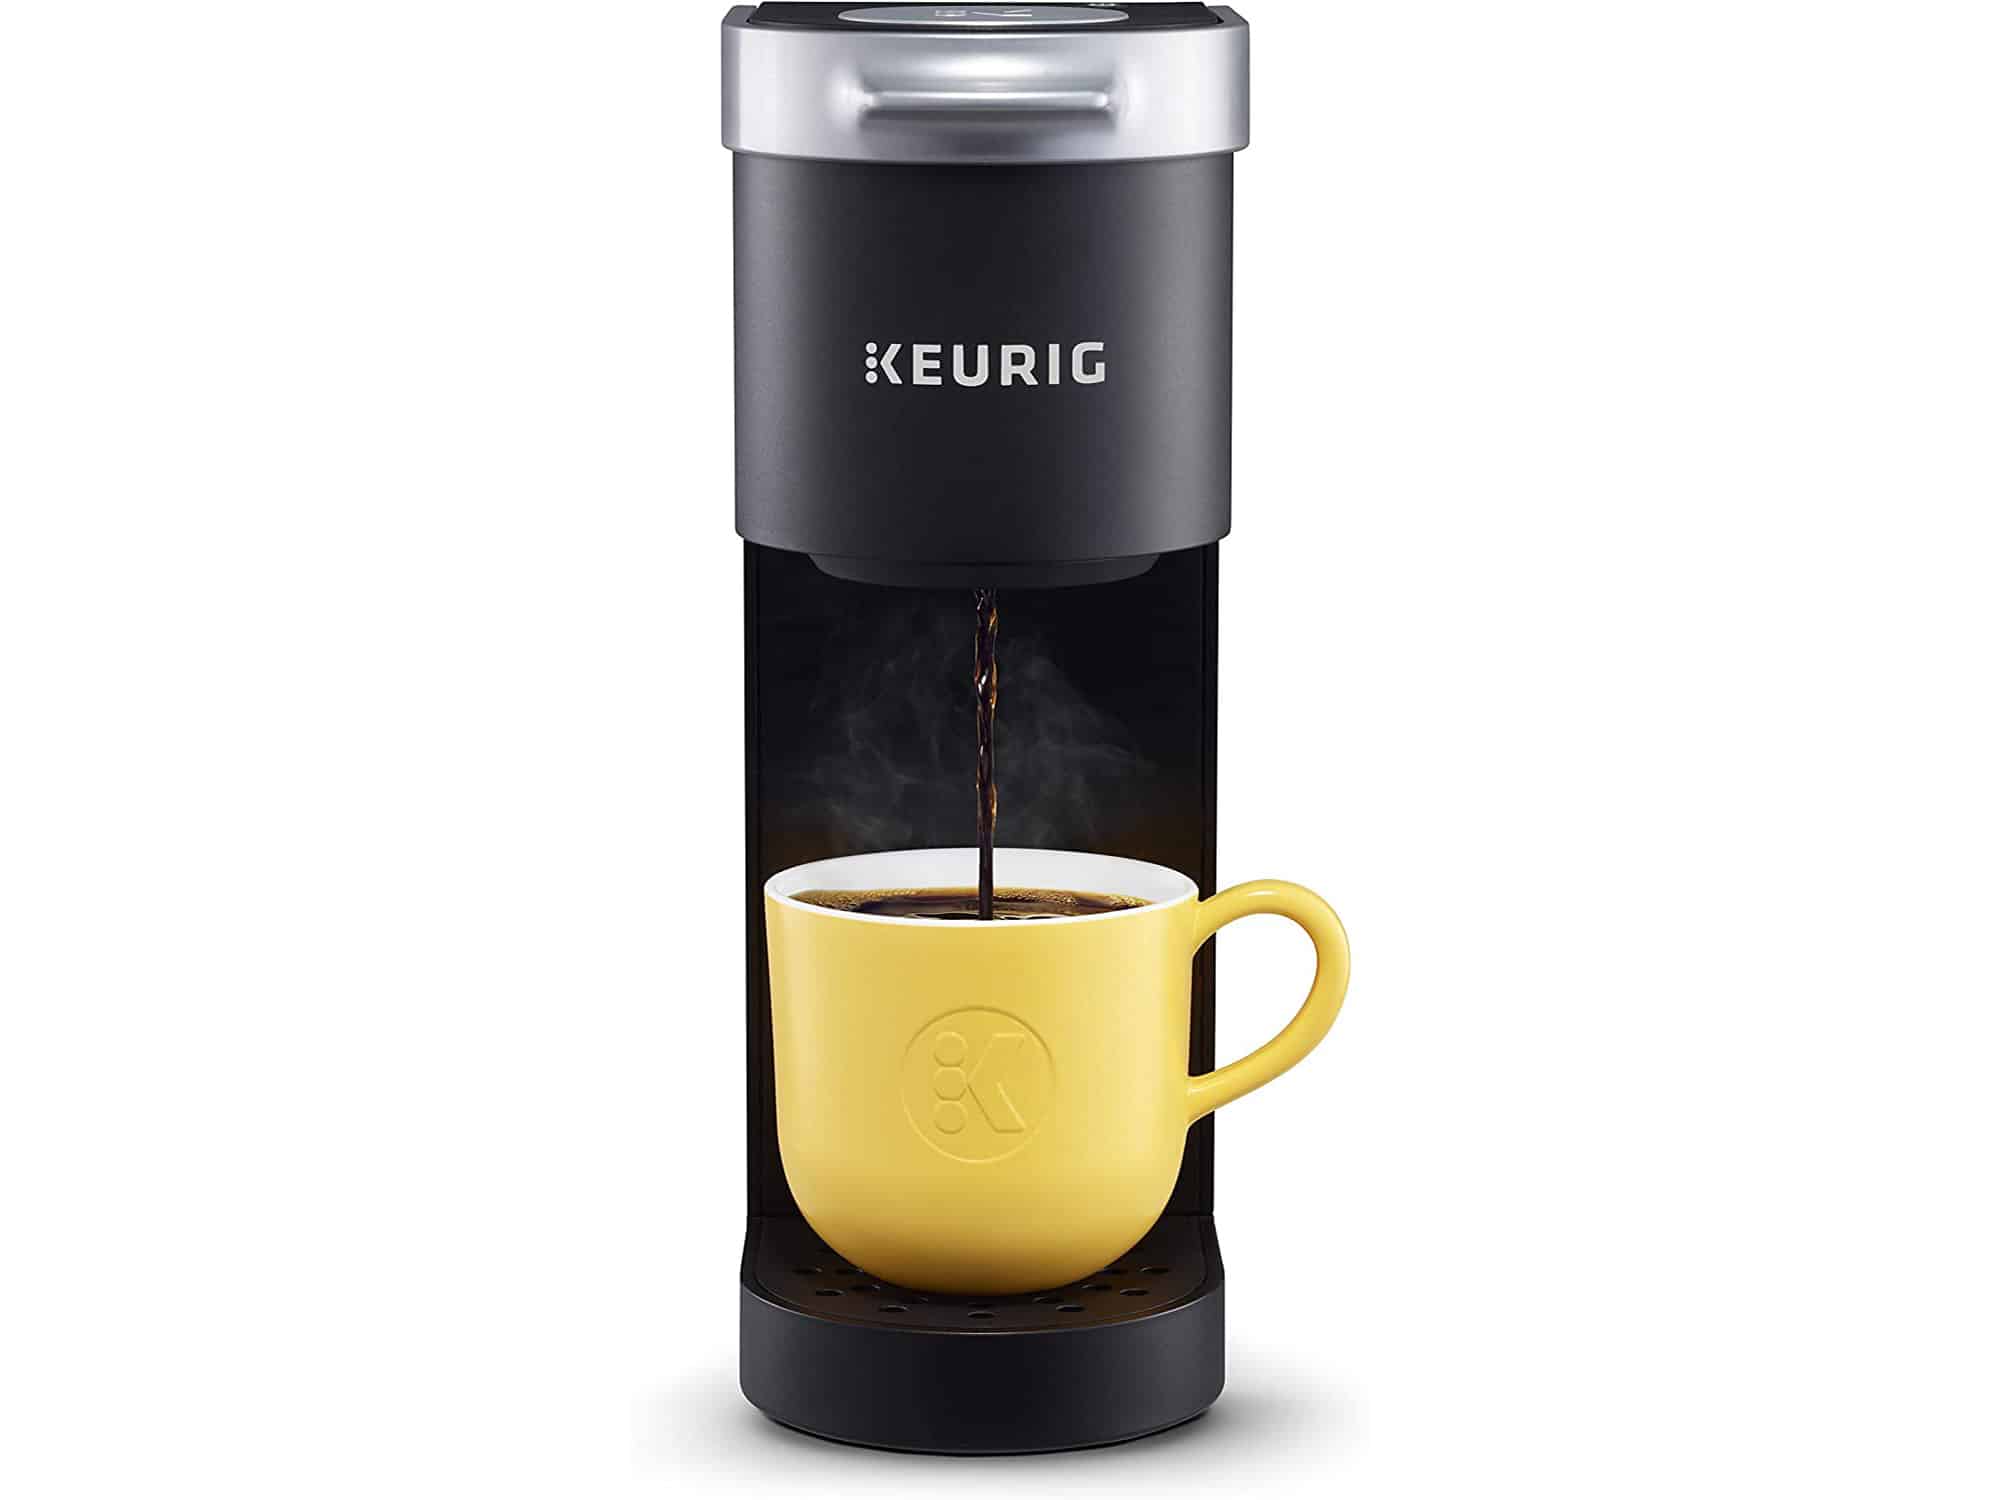 Keurig K-Mini Coffee Maker, Single Serve K-Cup Pod Coffee Brewer, 6 to 12 Oz. Brew Sizes, Matte Black